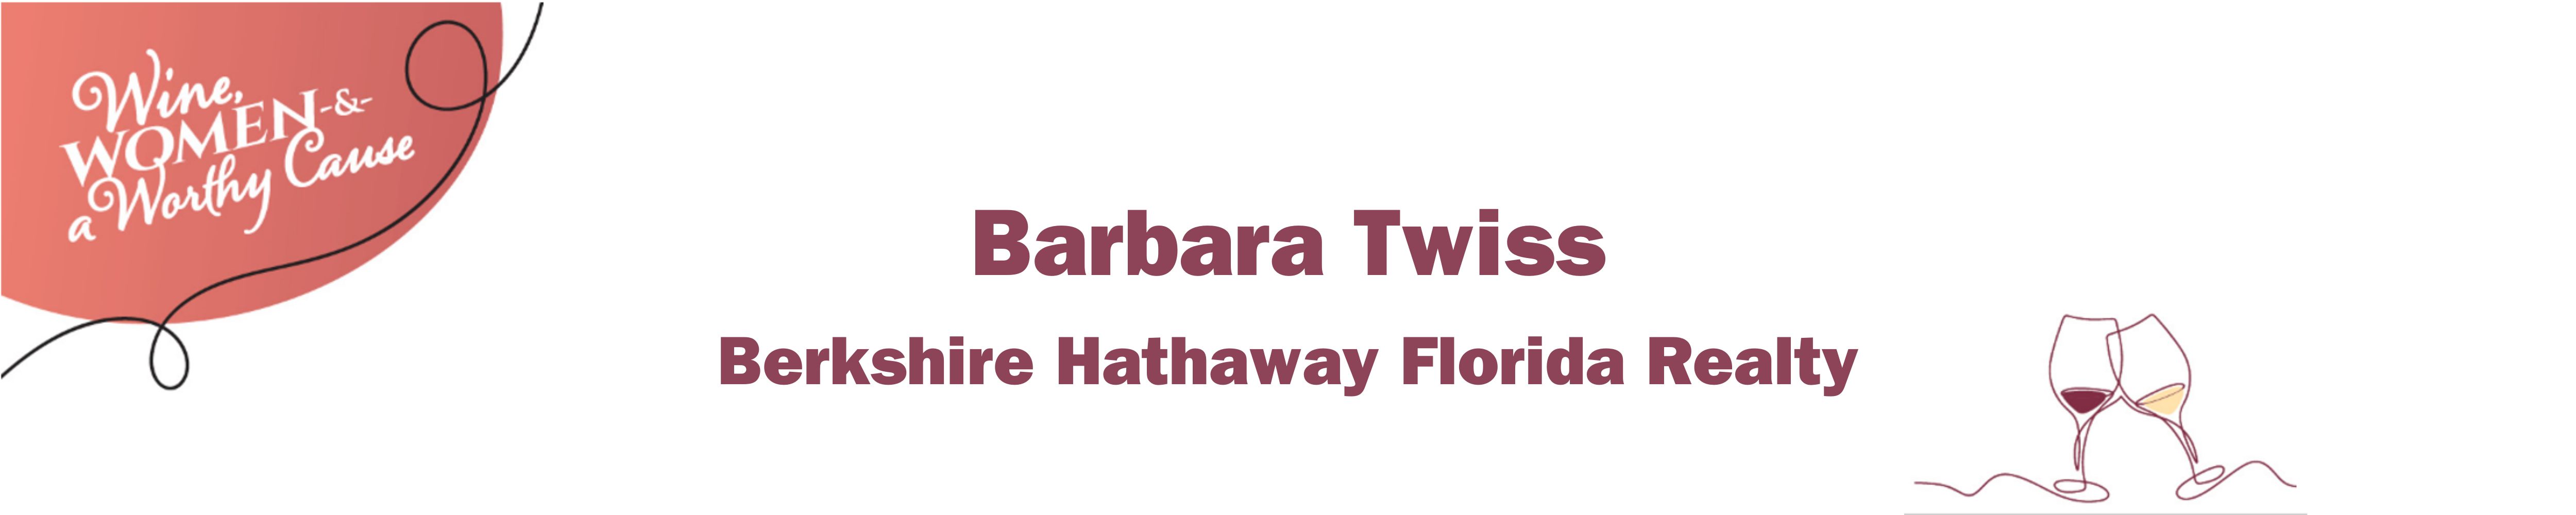 Barbara Twiss Berkshire Hathaway Florida Realty